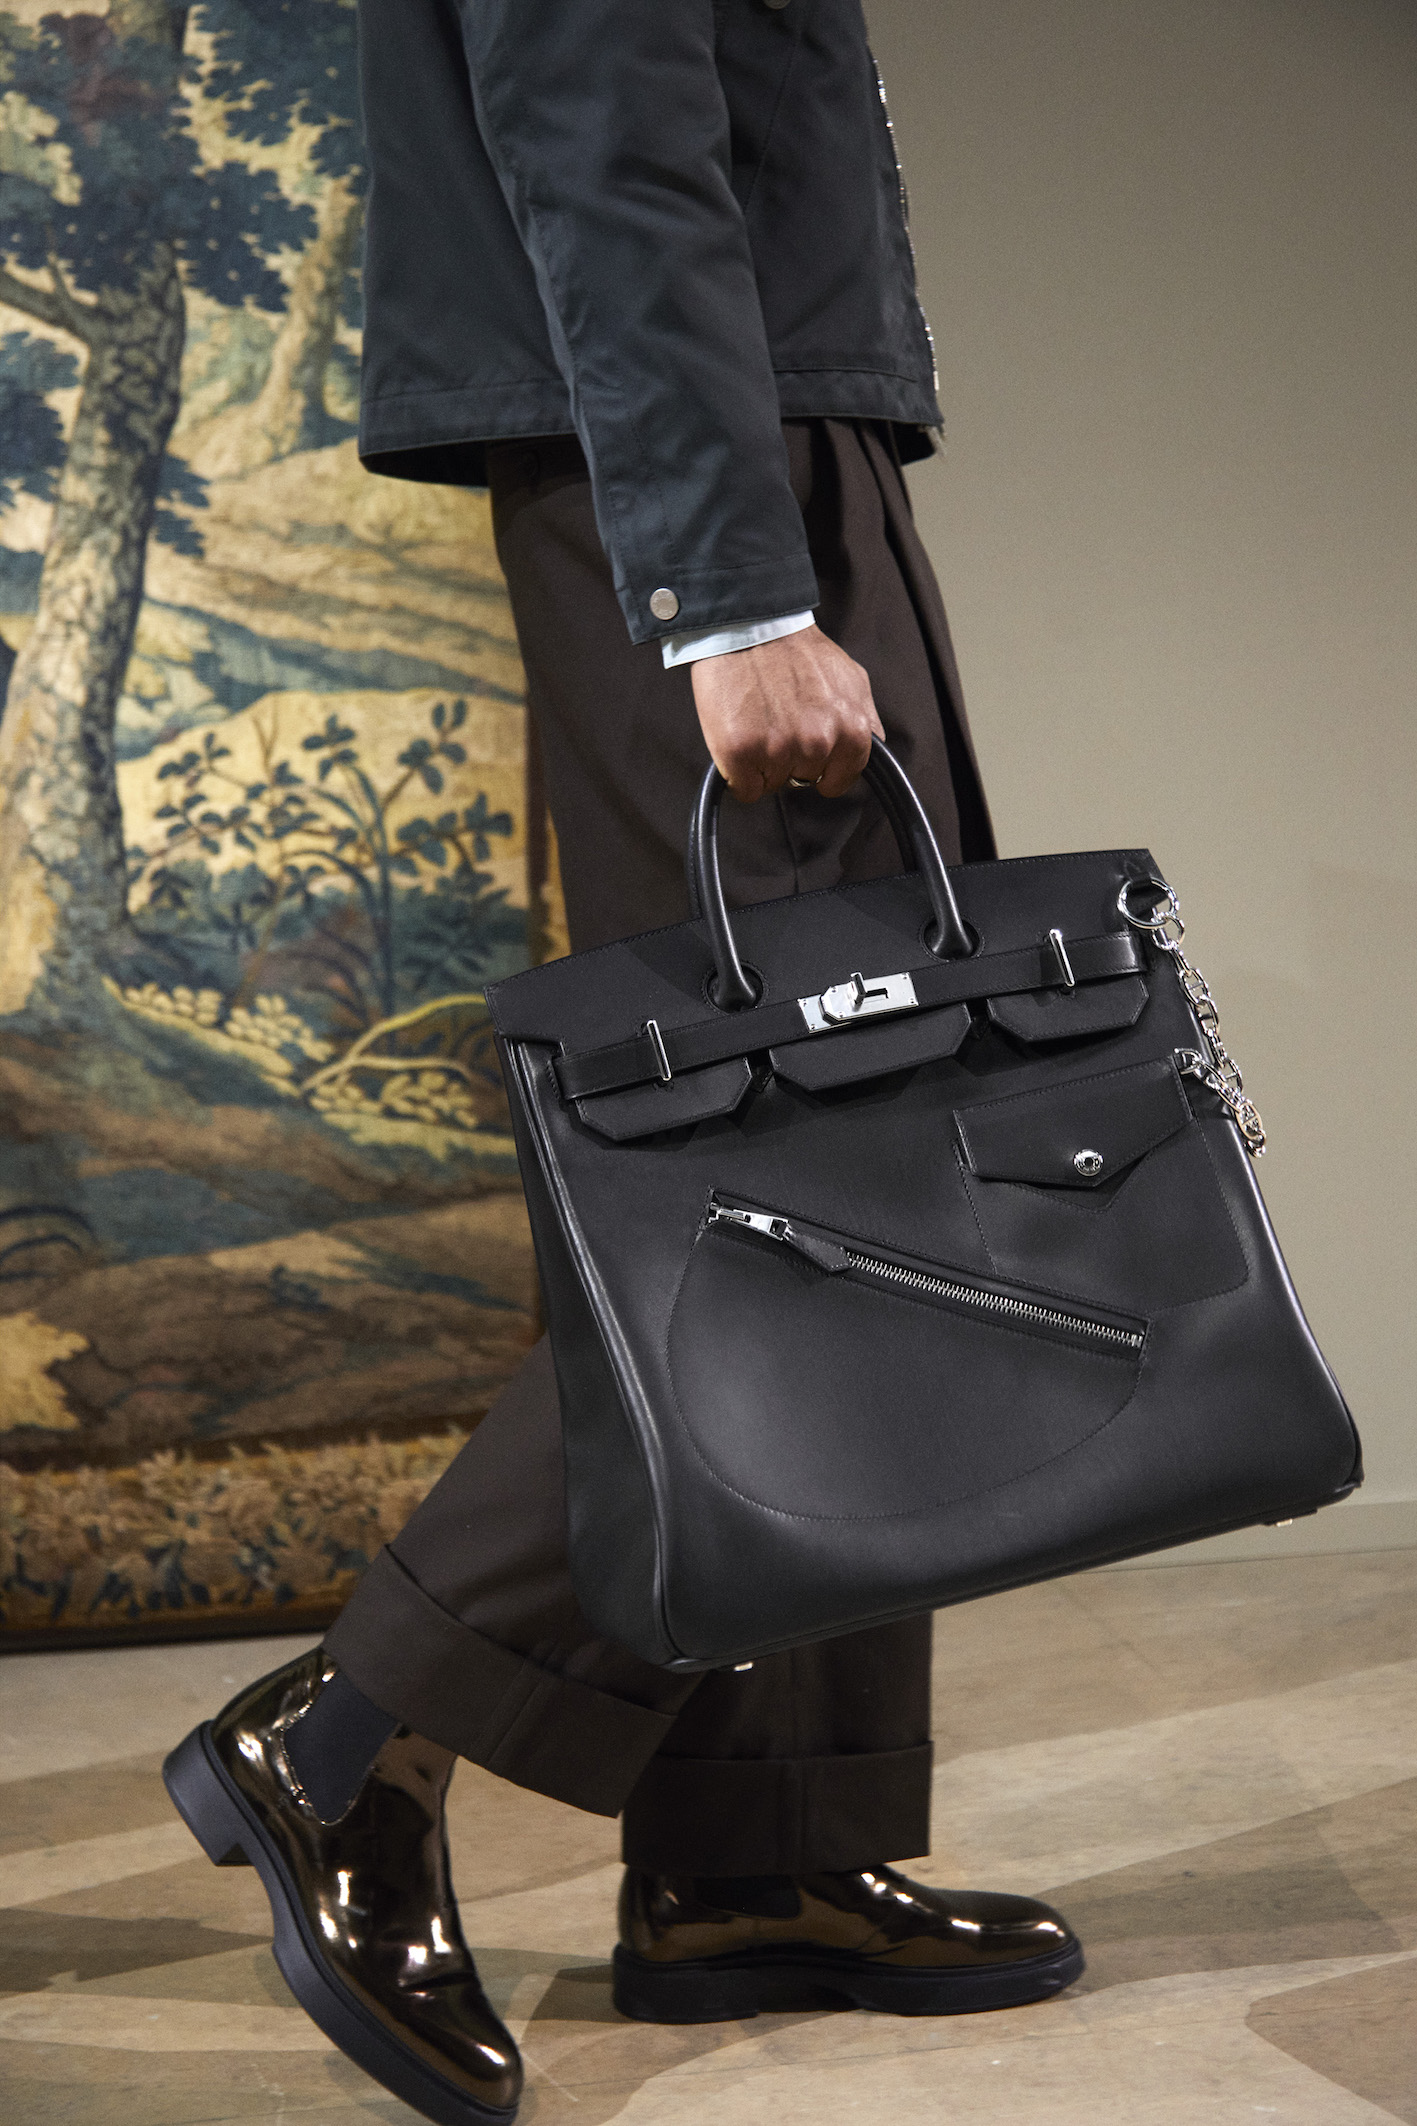 sección patata Maligno Nuevo objeto de deseo: Hermès lanza su primer bolso Birkin para hombre |  Grazia